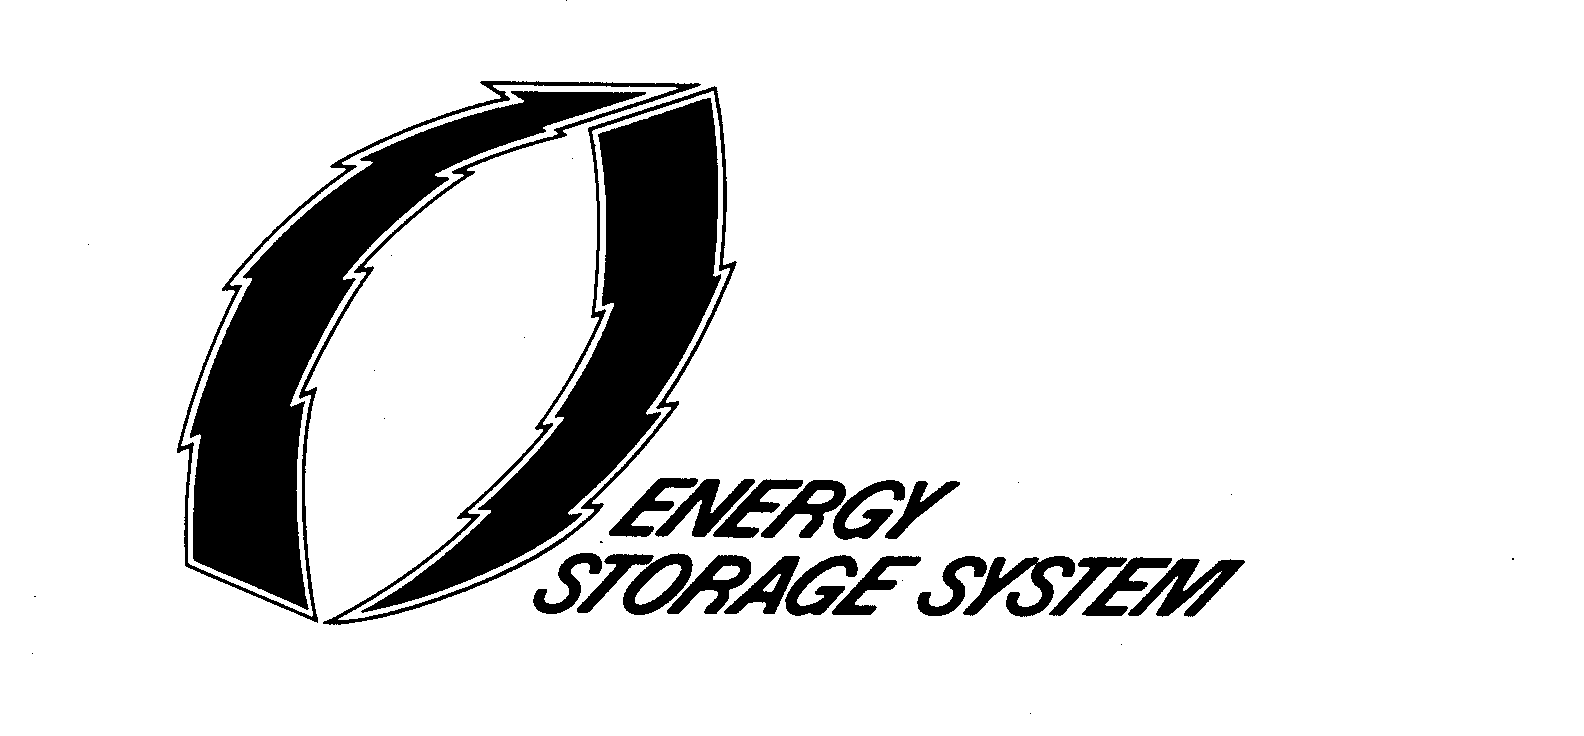  ENERGY STORAGE SYSTEM